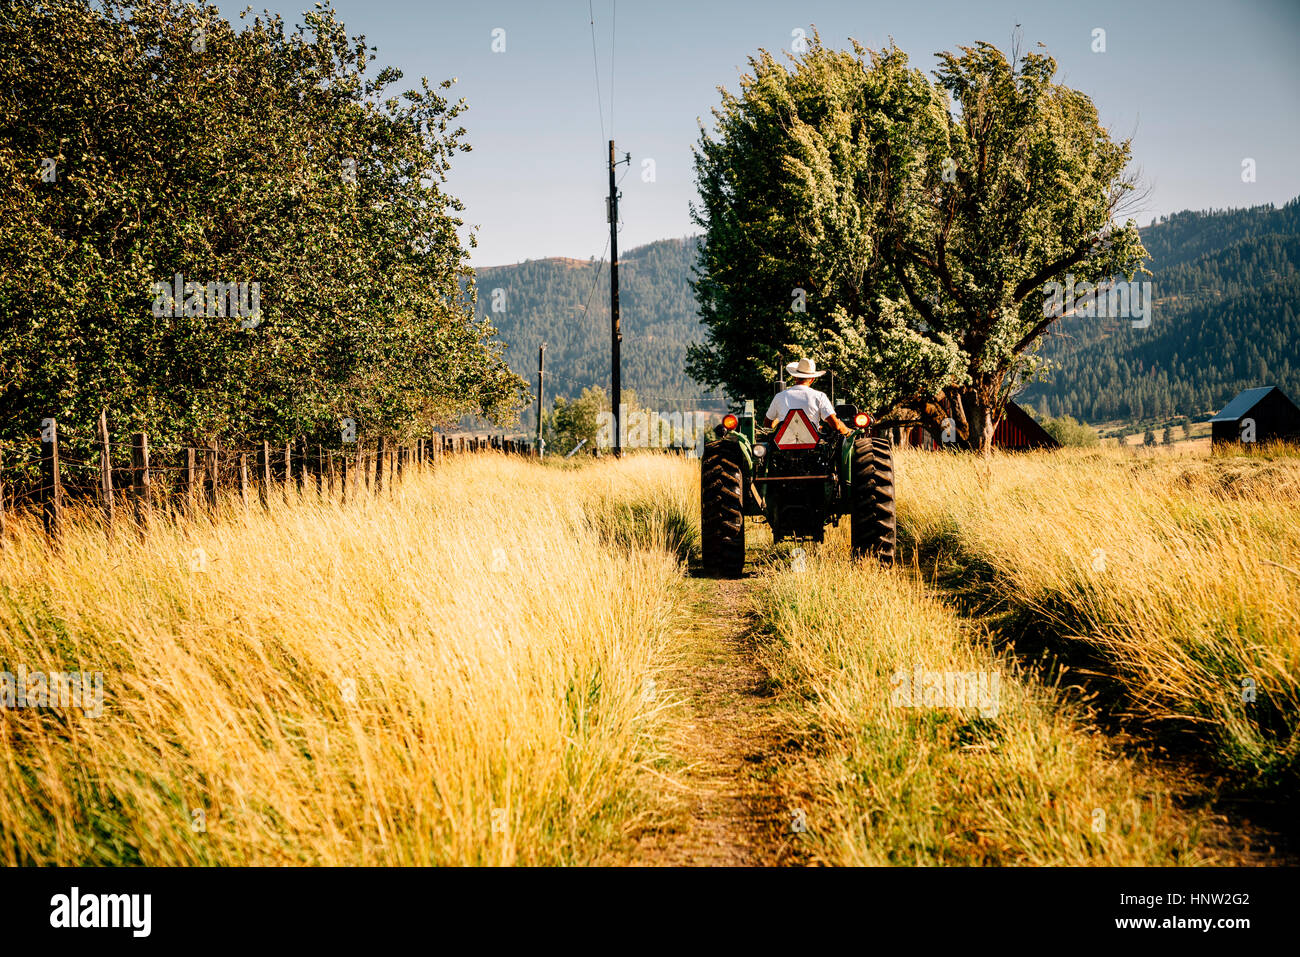 Caucasian farmer riding tractor Stock Photo